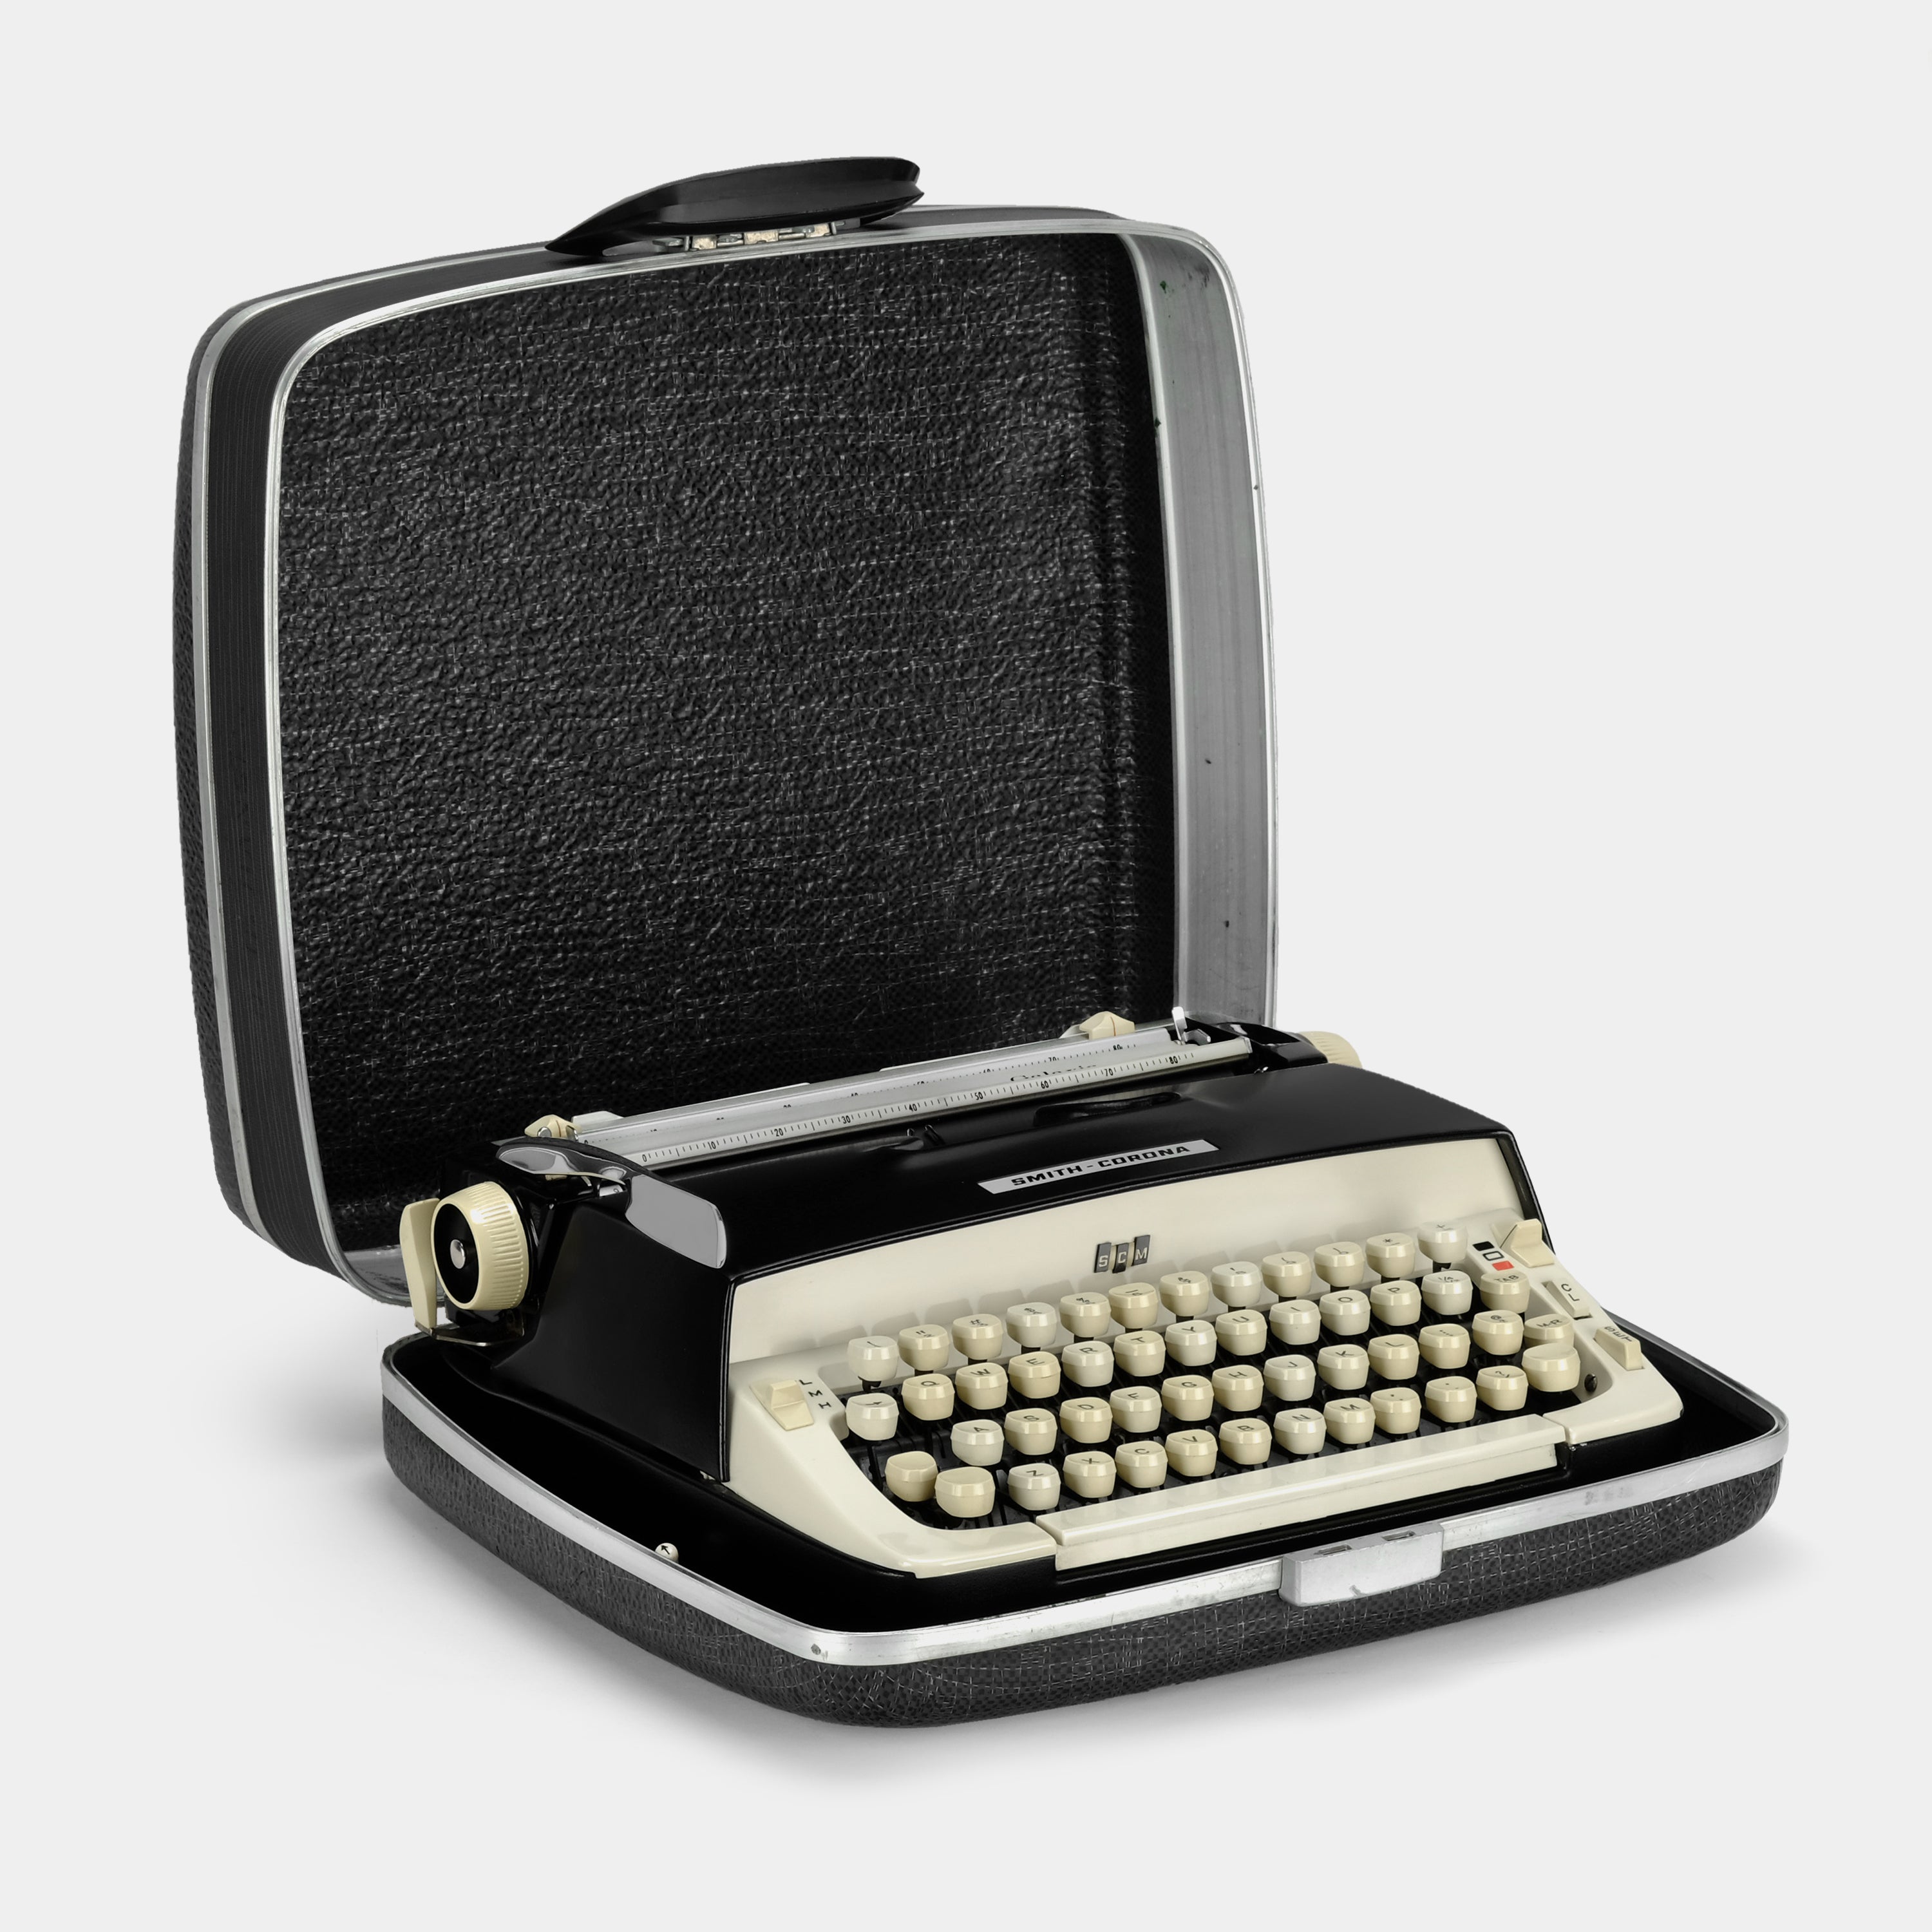 Smith-Corona Galaxie Black Manual Typewriter and Case